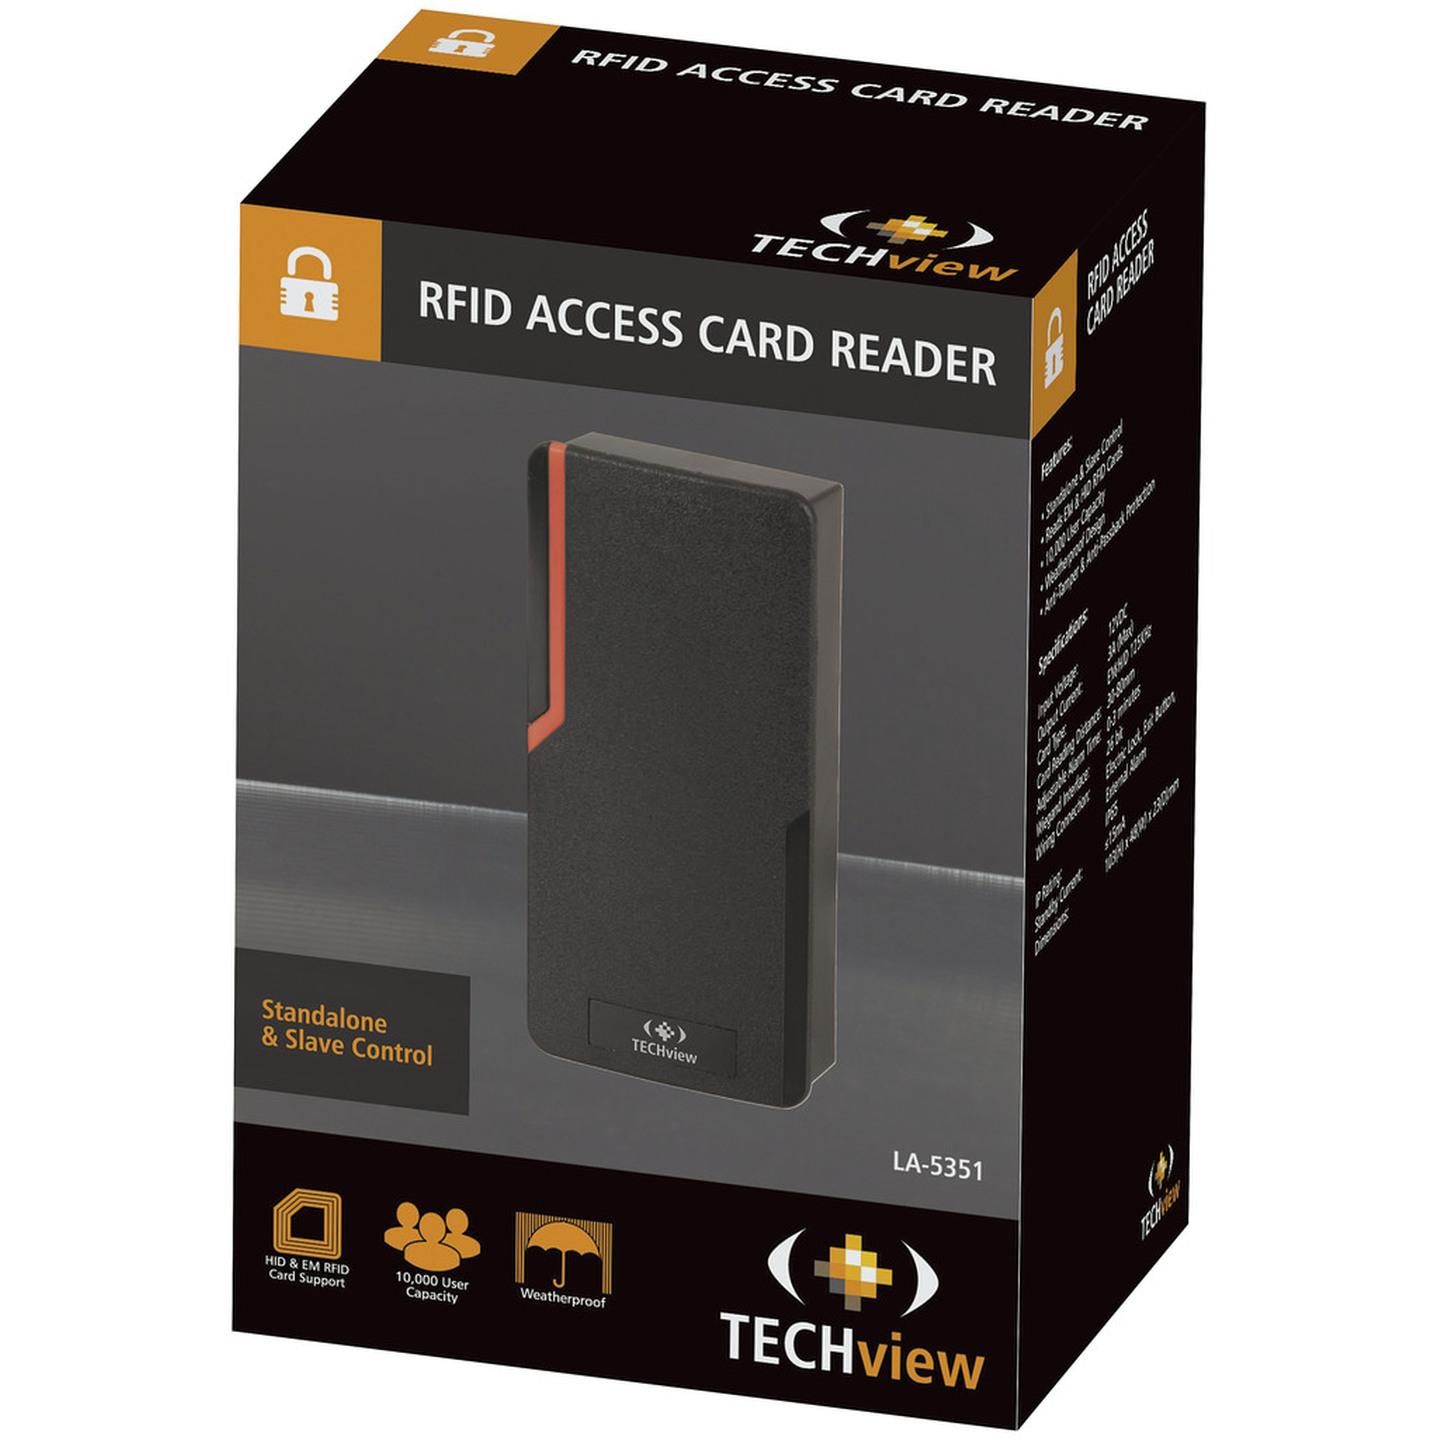 RFID Access Card Reader